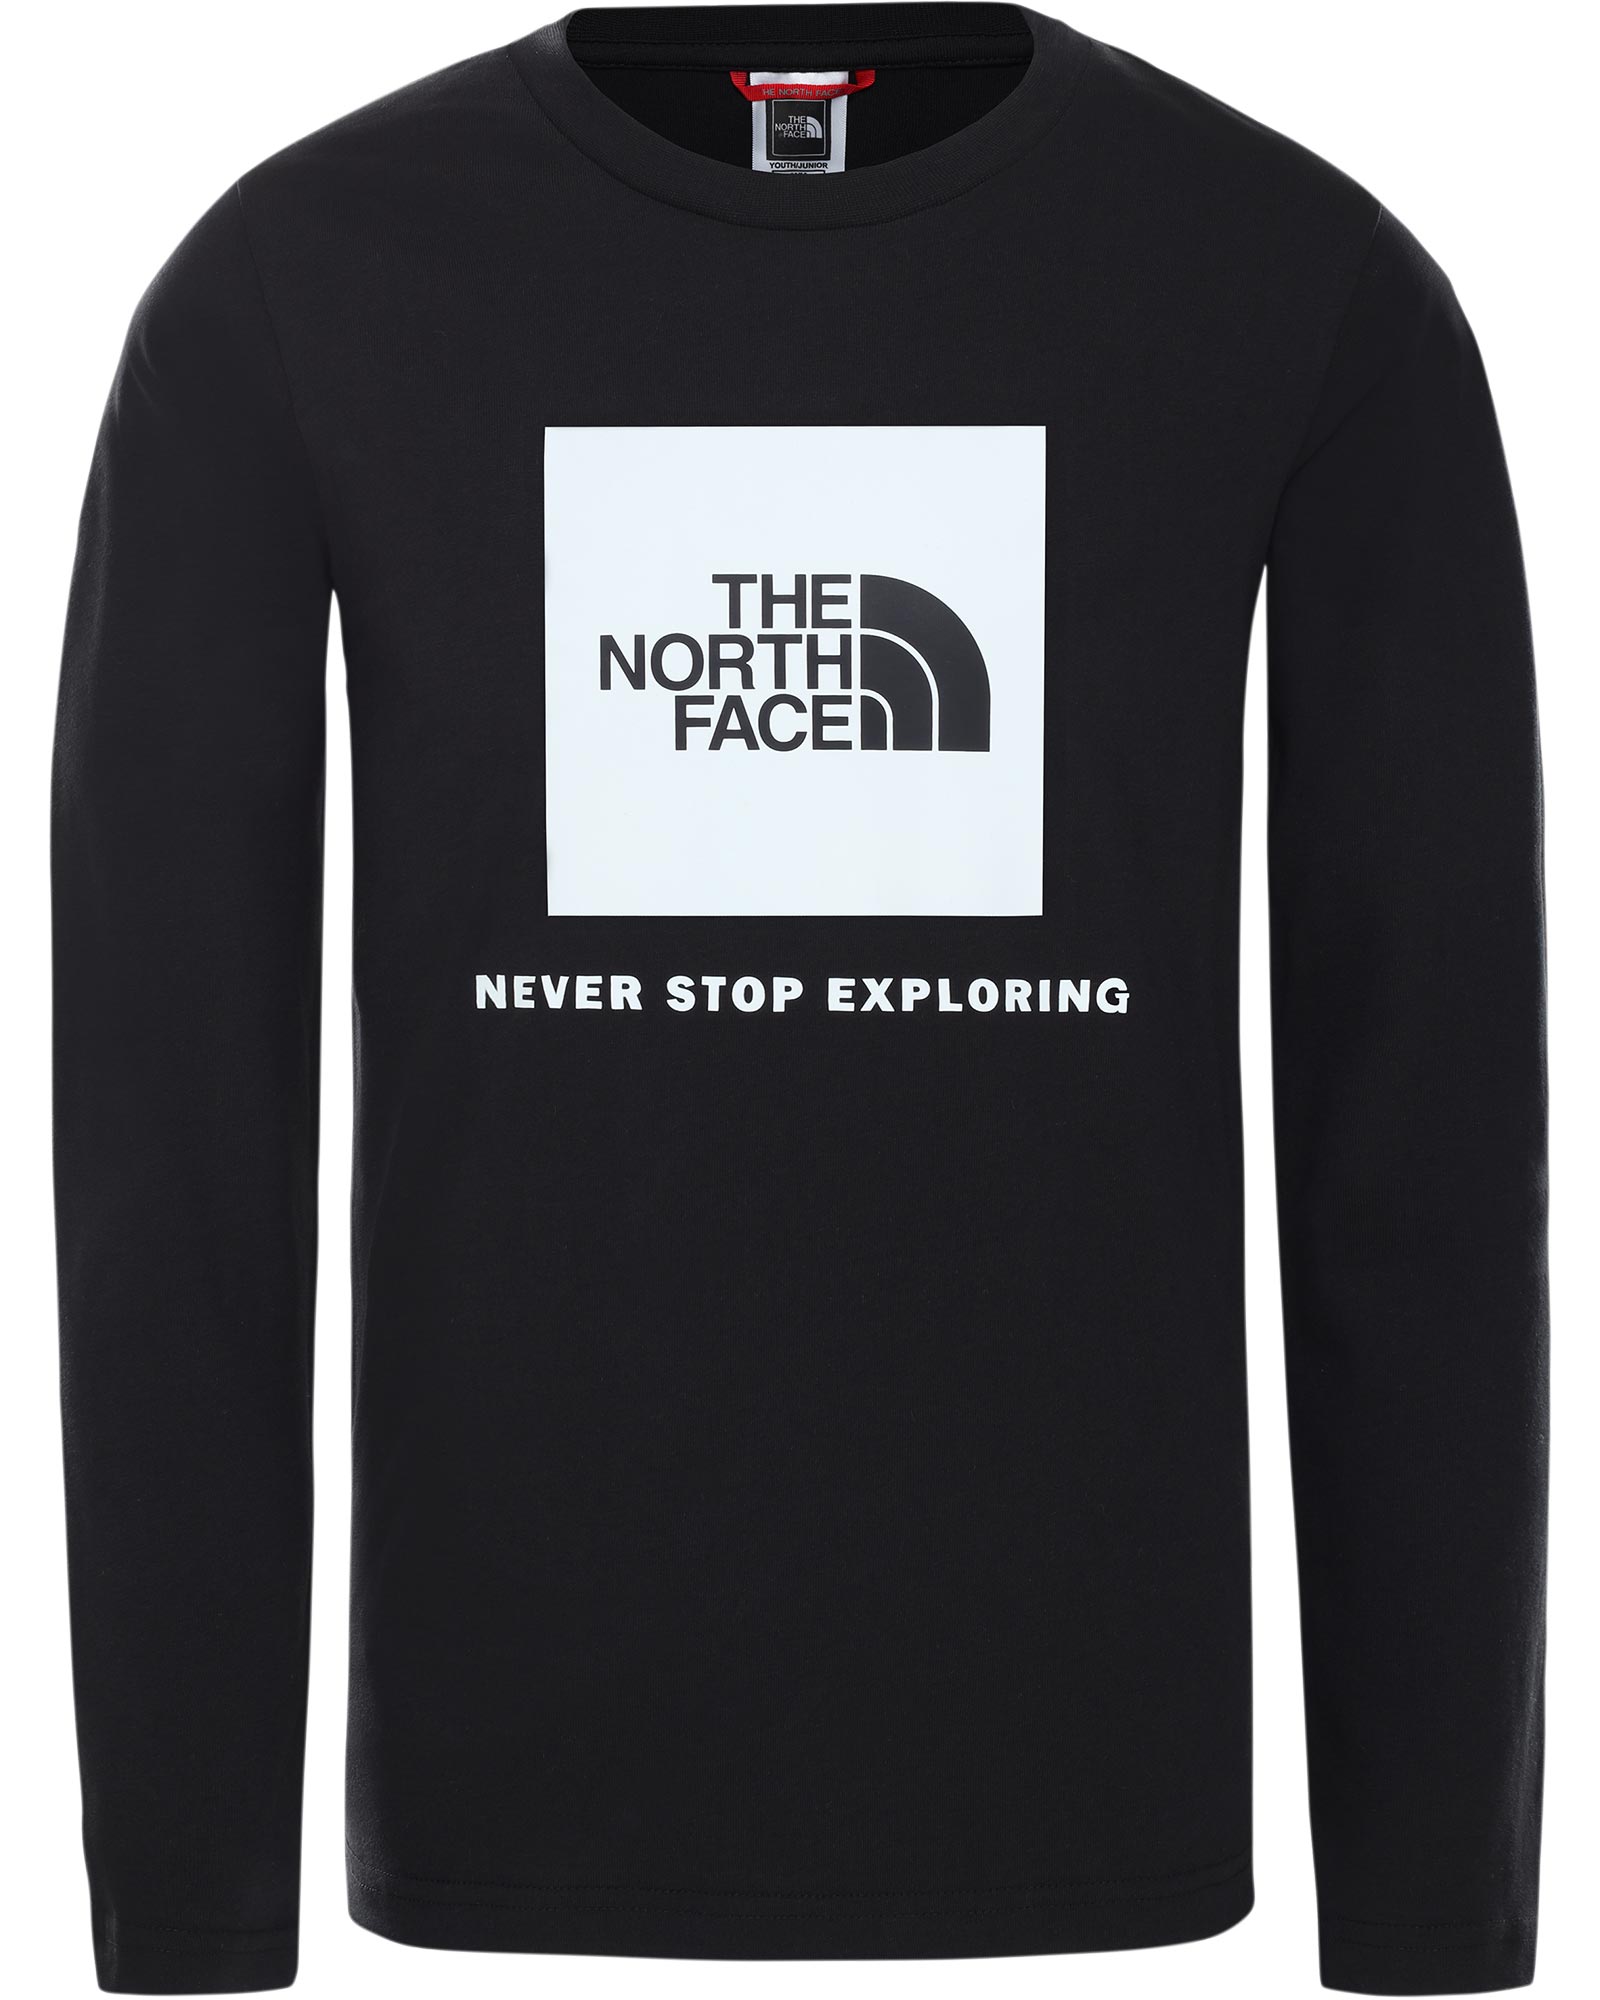 The North Face Box Kids’ Long Sleeve T Shirt - TNF Black/Glow S